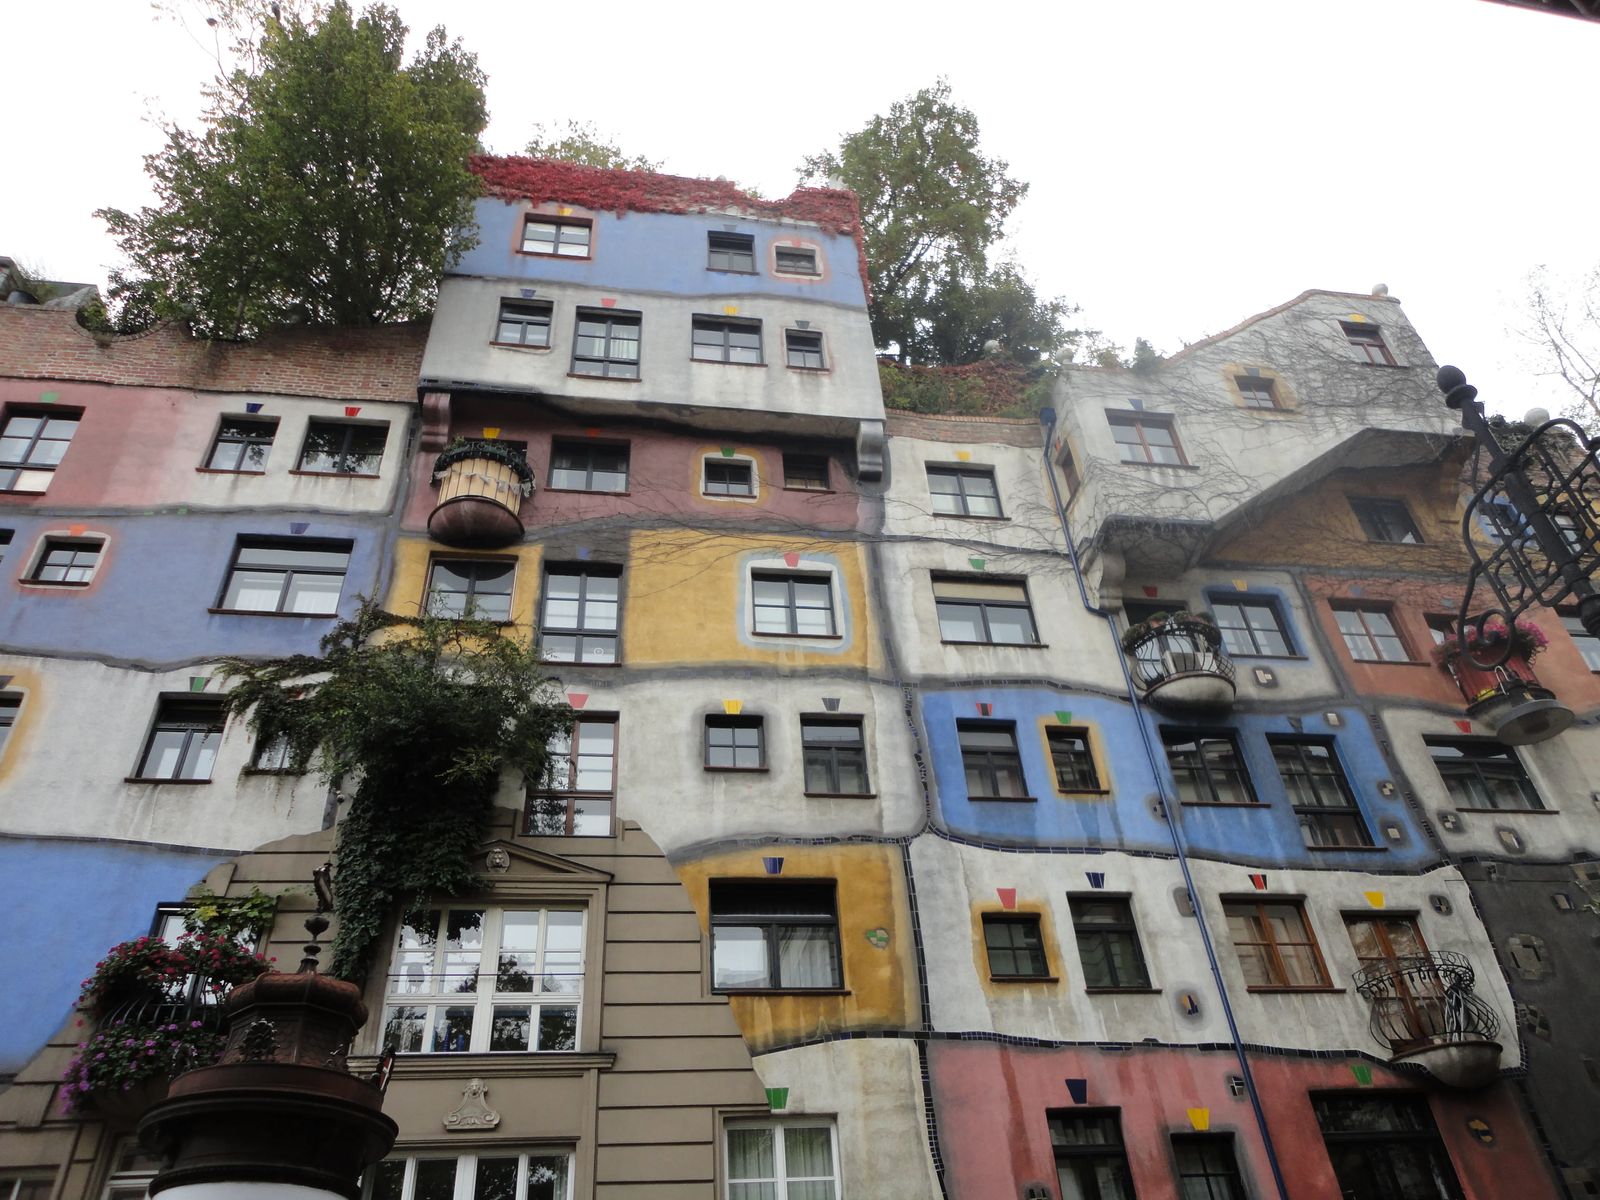 Photo of Hundertwasserhaus, in Vienna, Austria